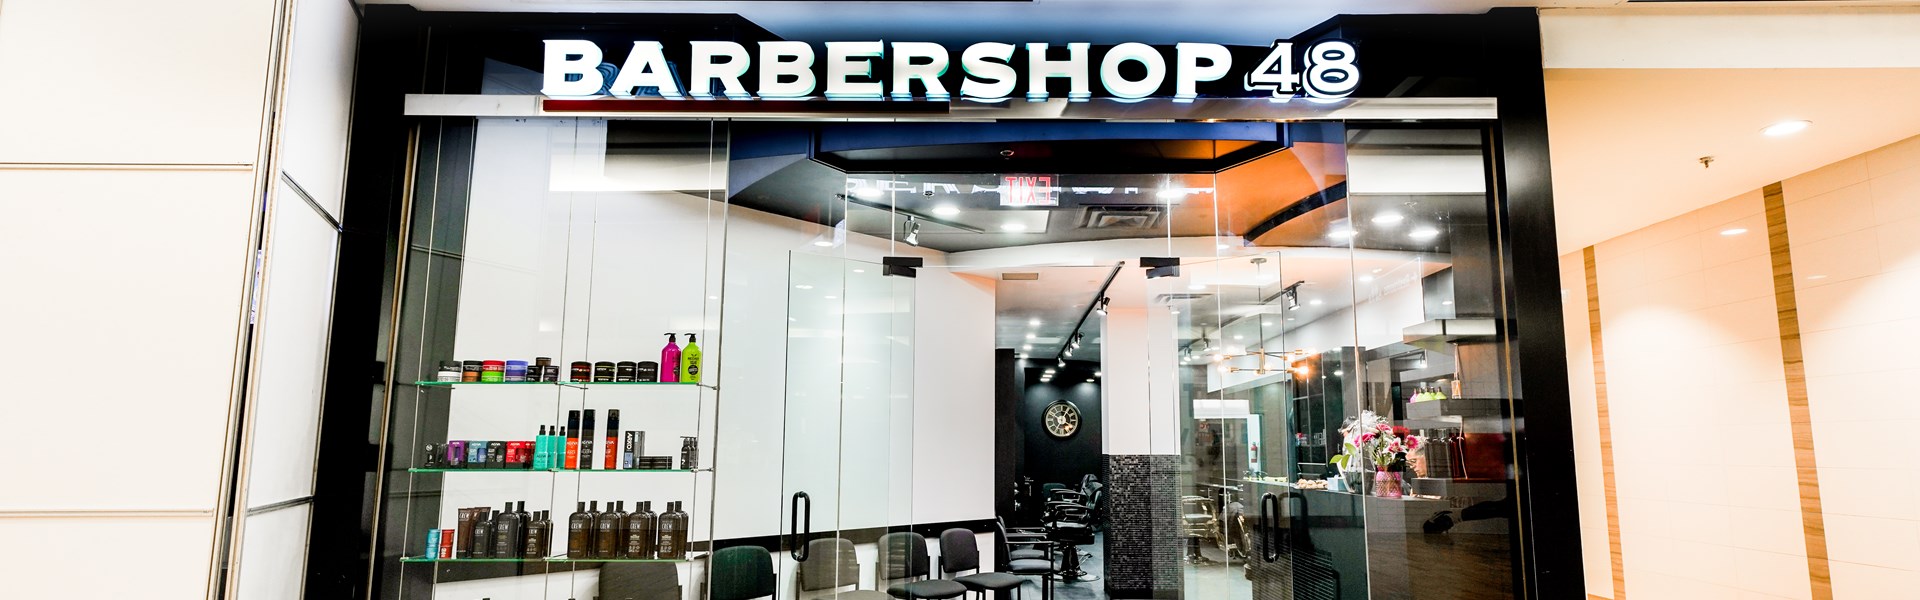 Barbershop 48